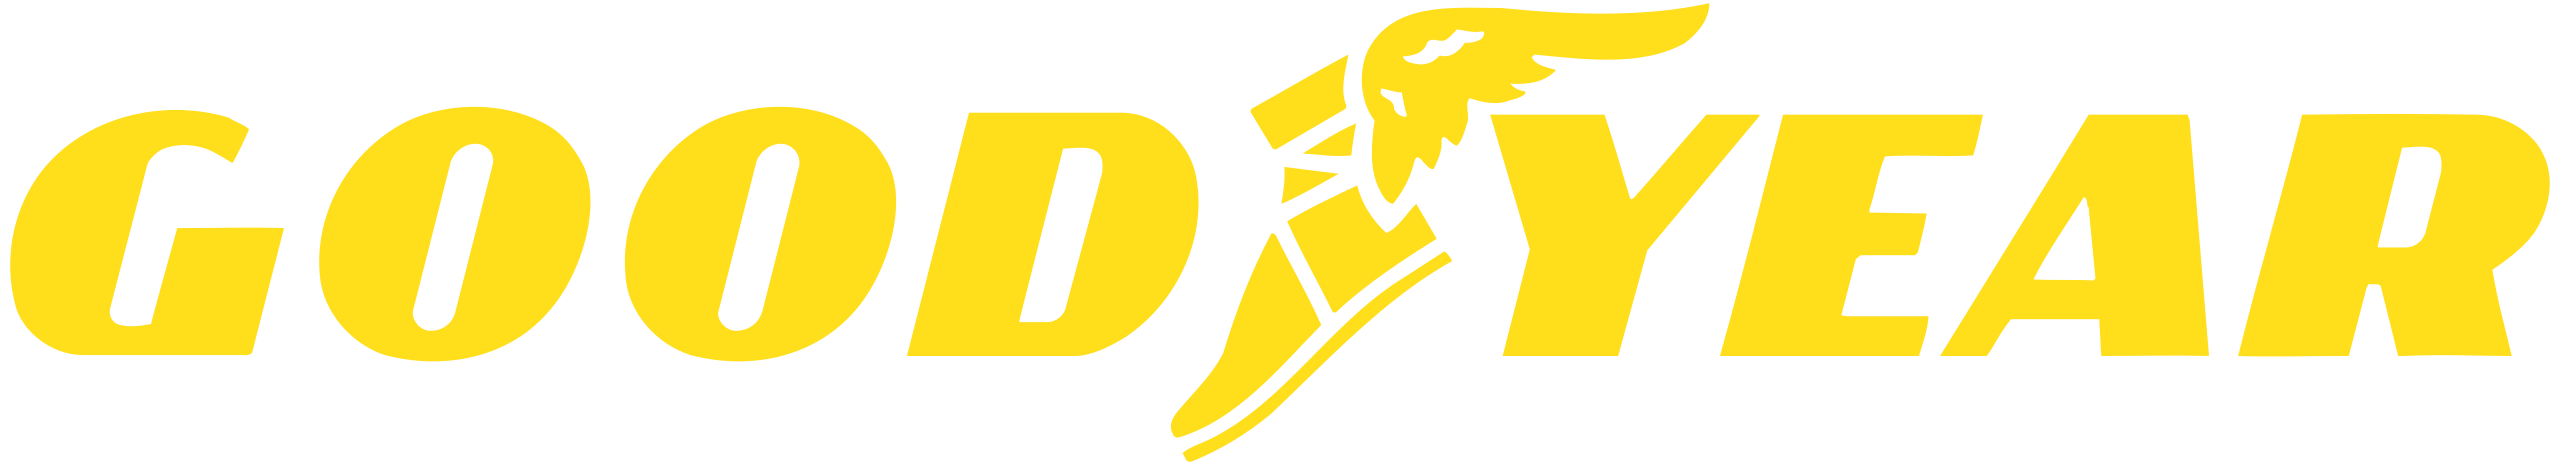 Goodyear logo.svg